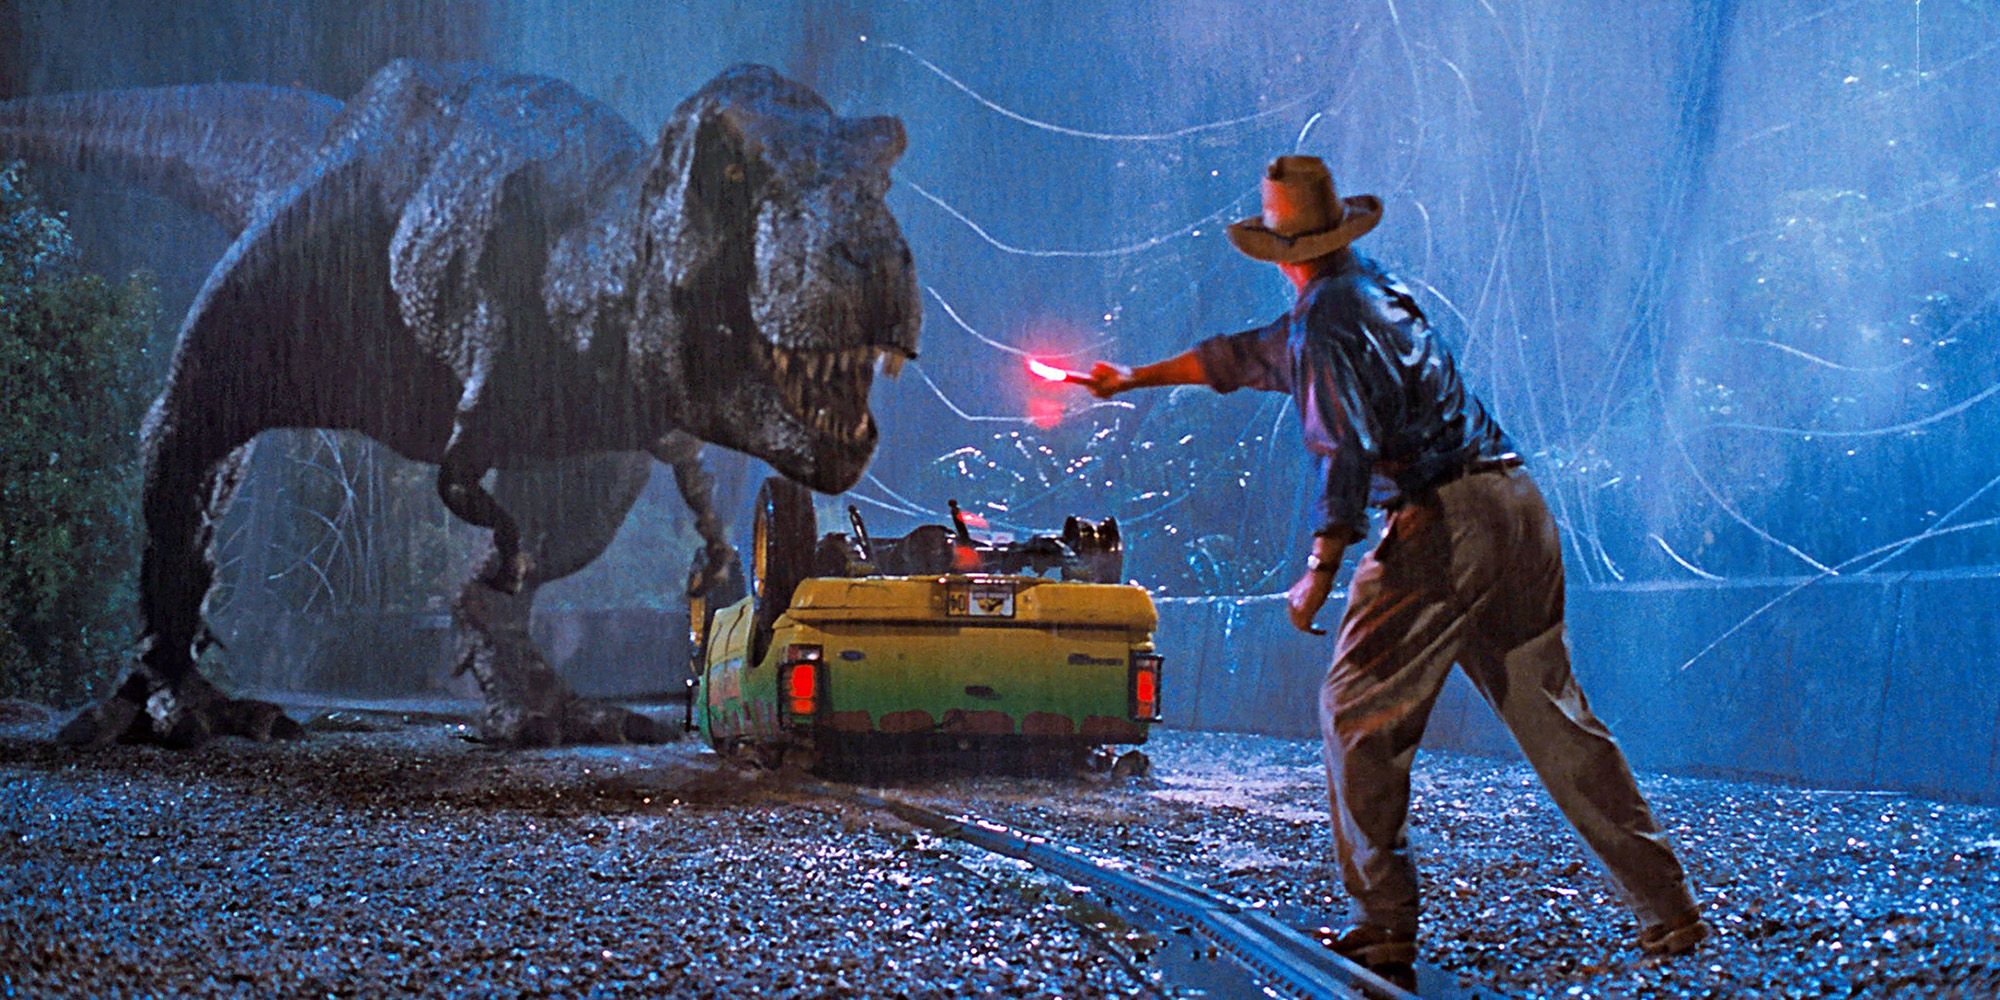 Toda la franquicia de Jurassic Park eliminada en un video hilarante